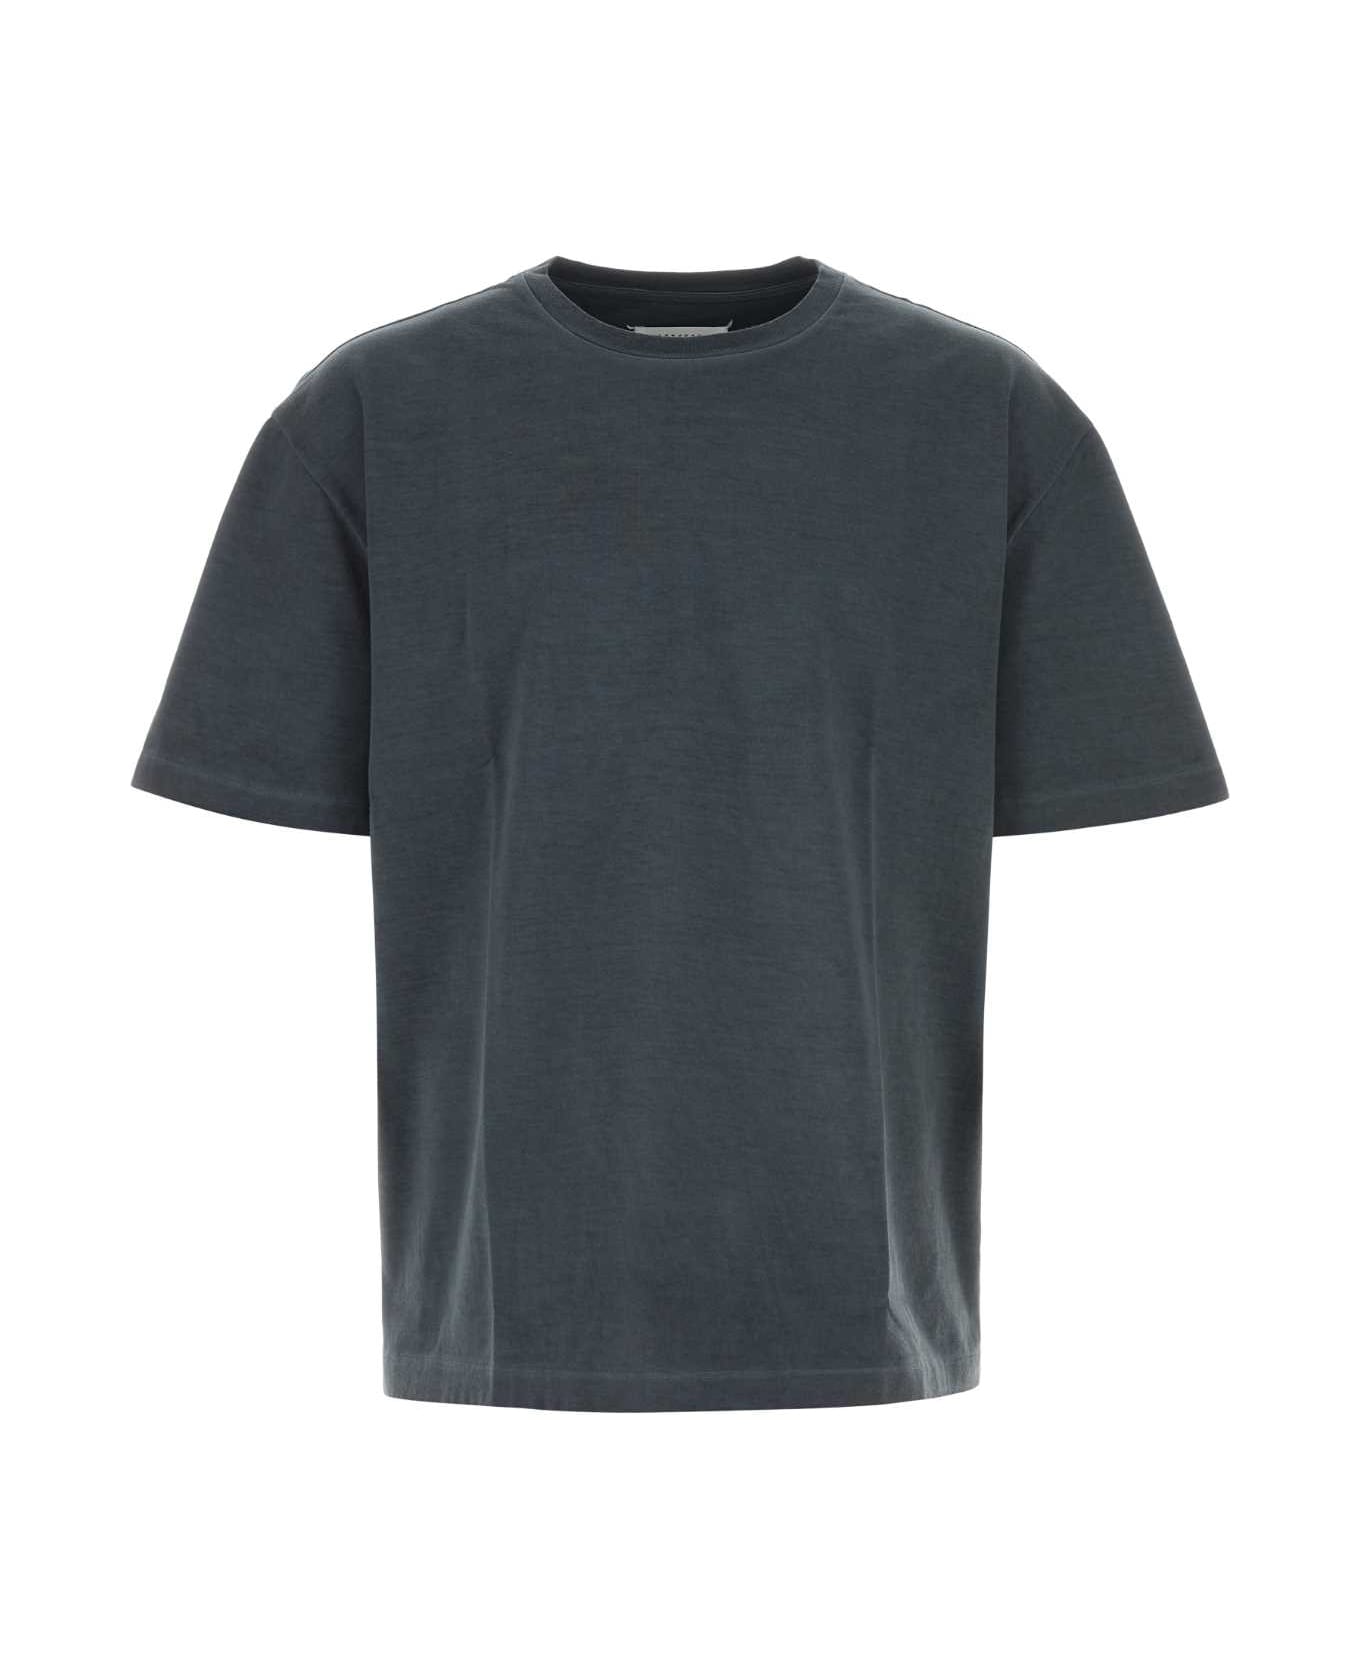 Maison Margiela Dark Grey Cotton Oversize T-shirt - ANTRACITE